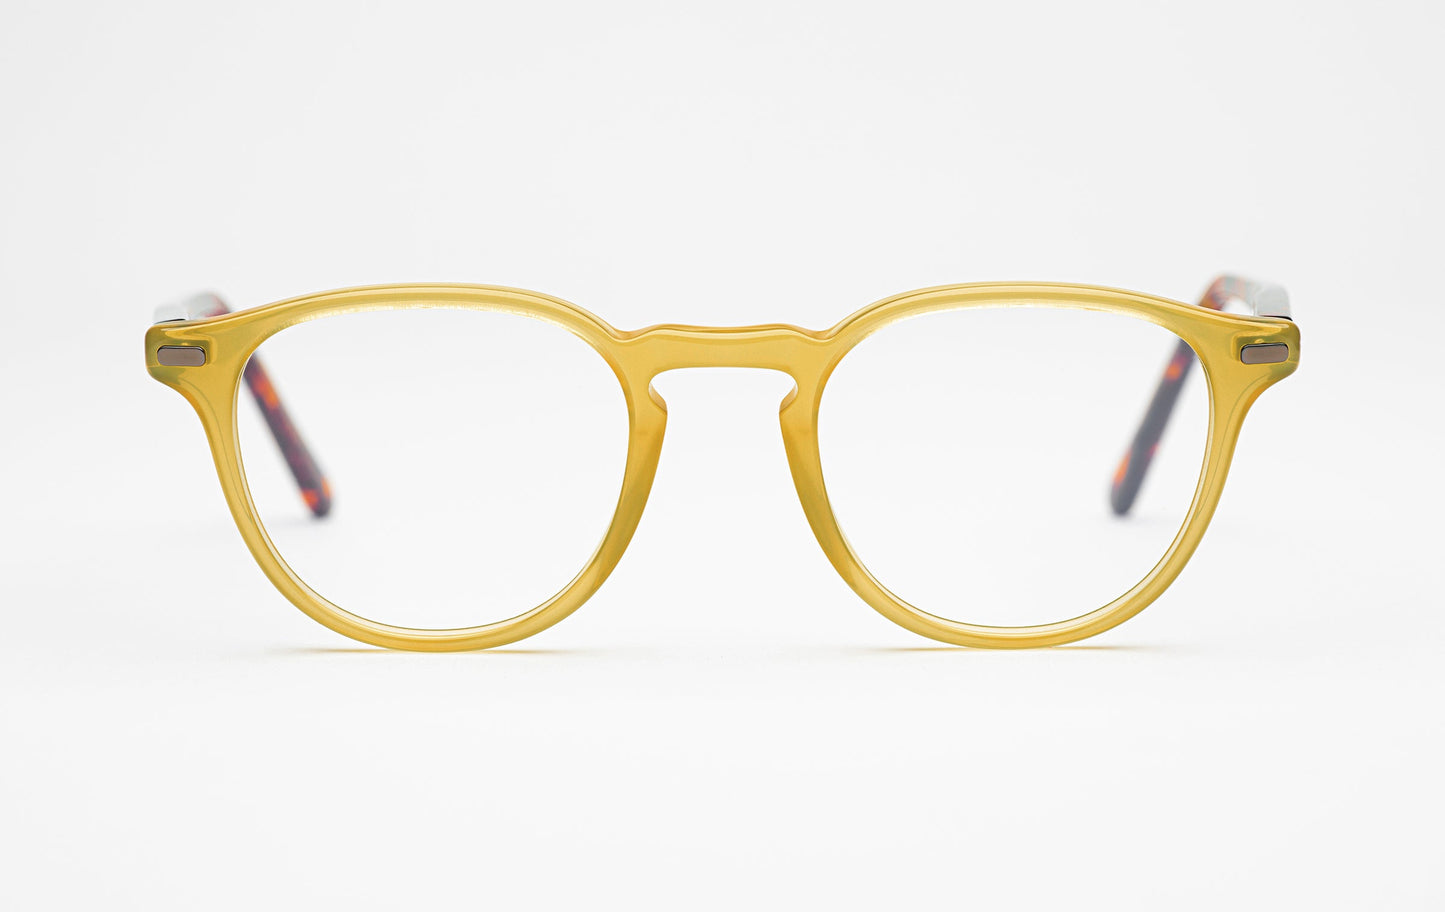 The Sage 2 | Acetate Round Frame Glasses - Designer Prescription – Yellow with Tortoiseshell Temples